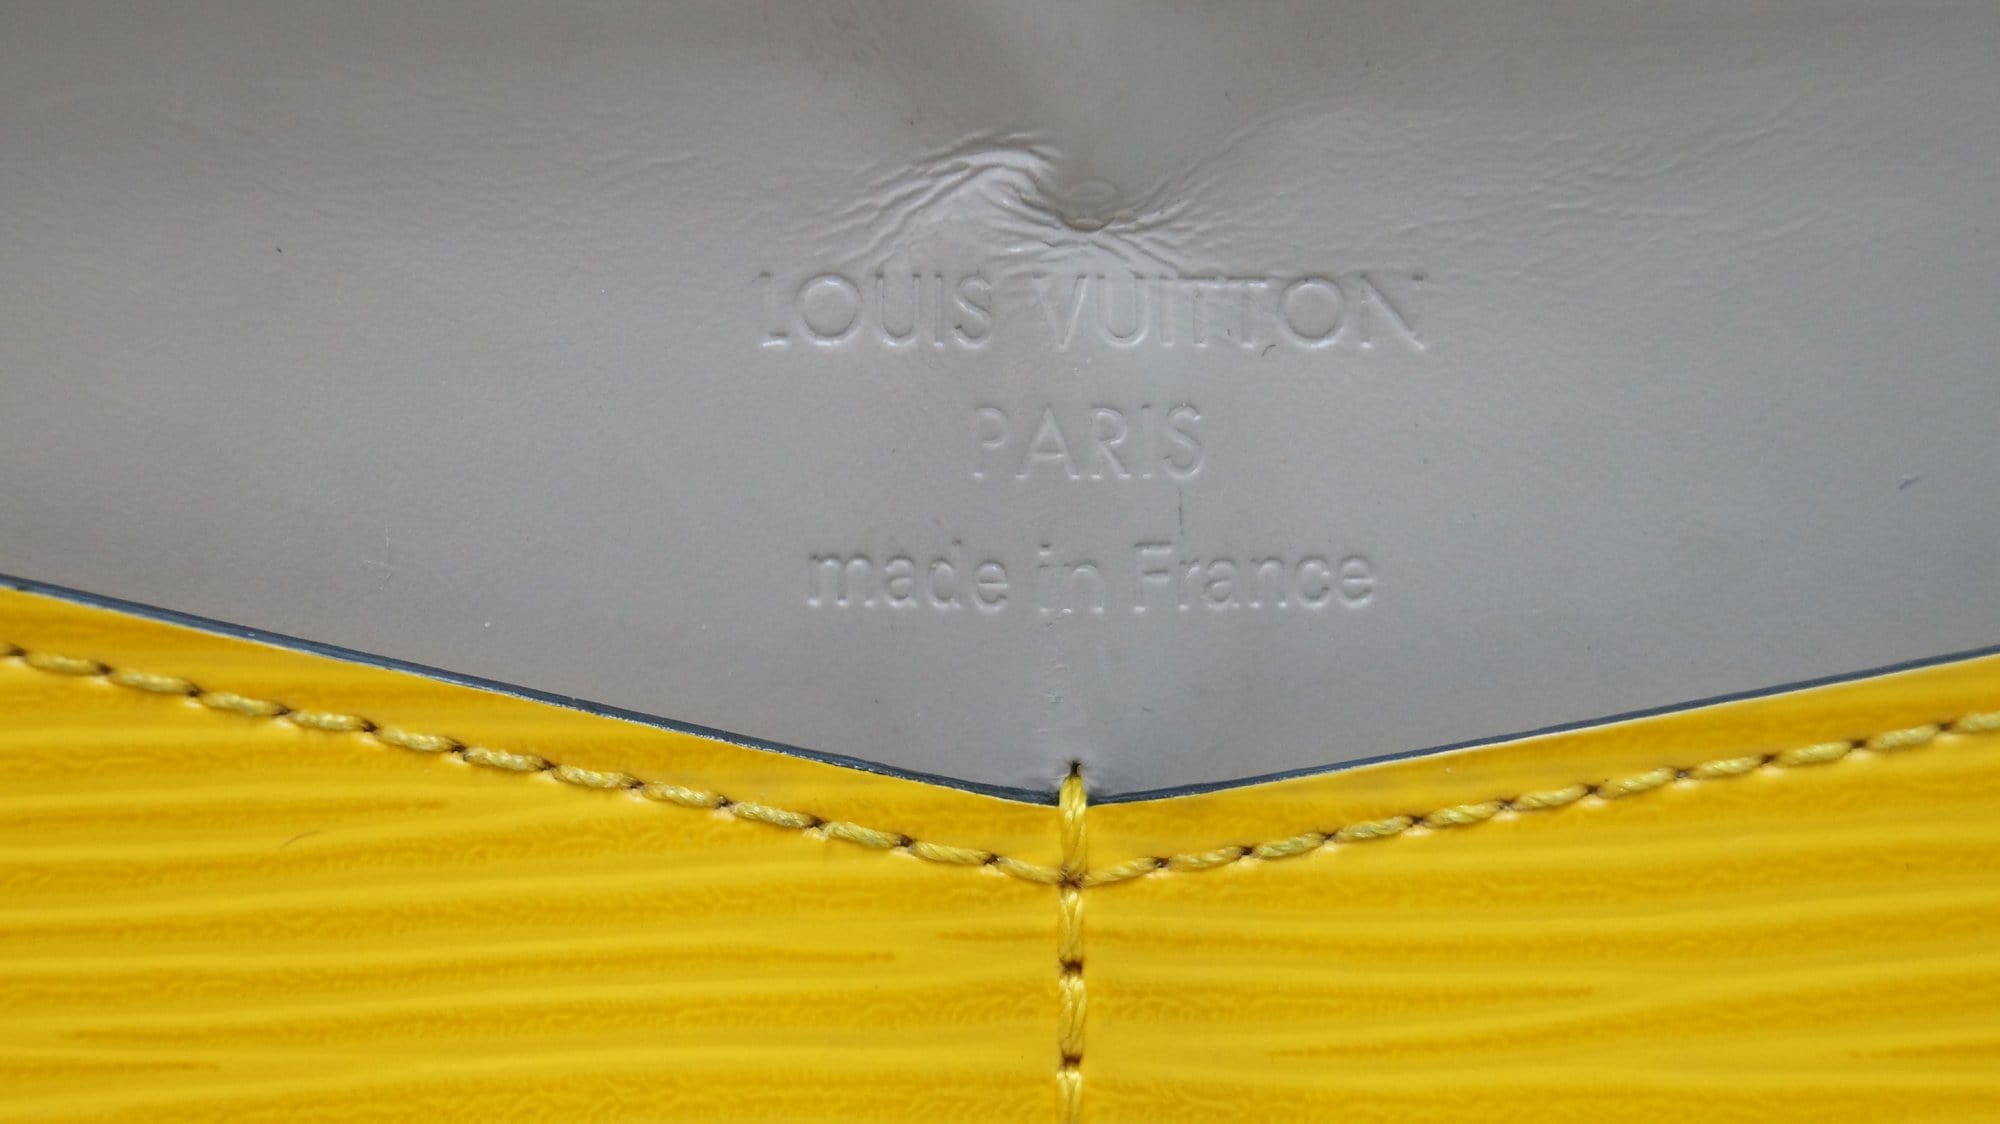 Louis Vuitton Long Wallet Portefeuille Elysee Monogram Yellow M60505  LOUISVUITTON